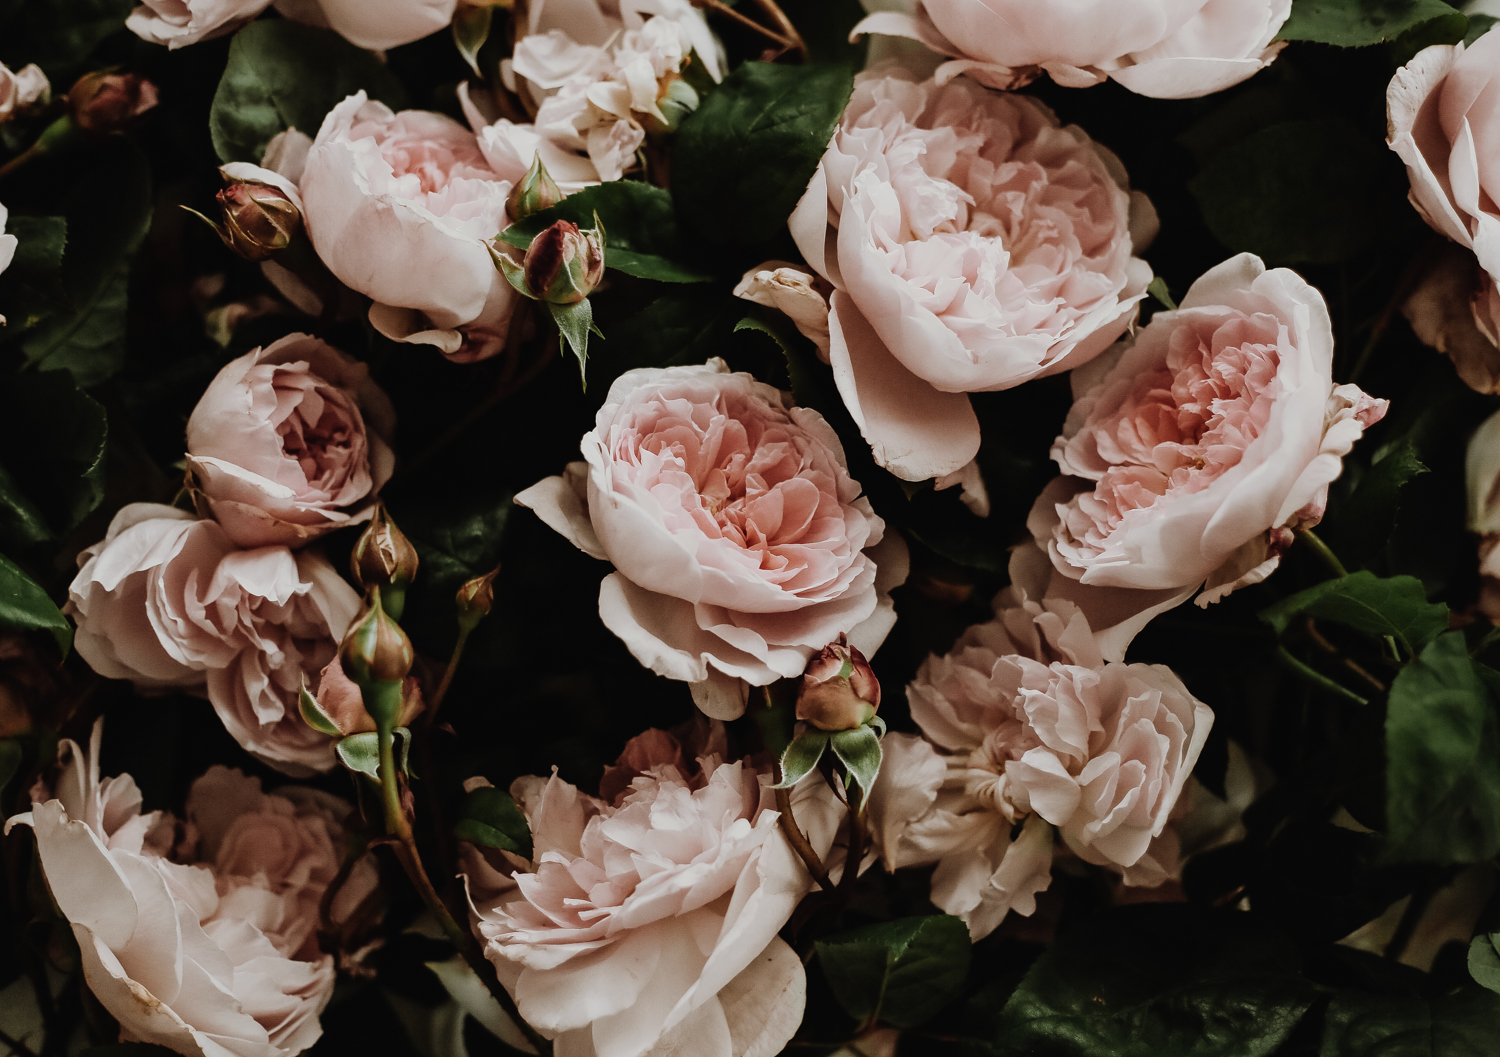 Garden Roses III by Kara Hynes